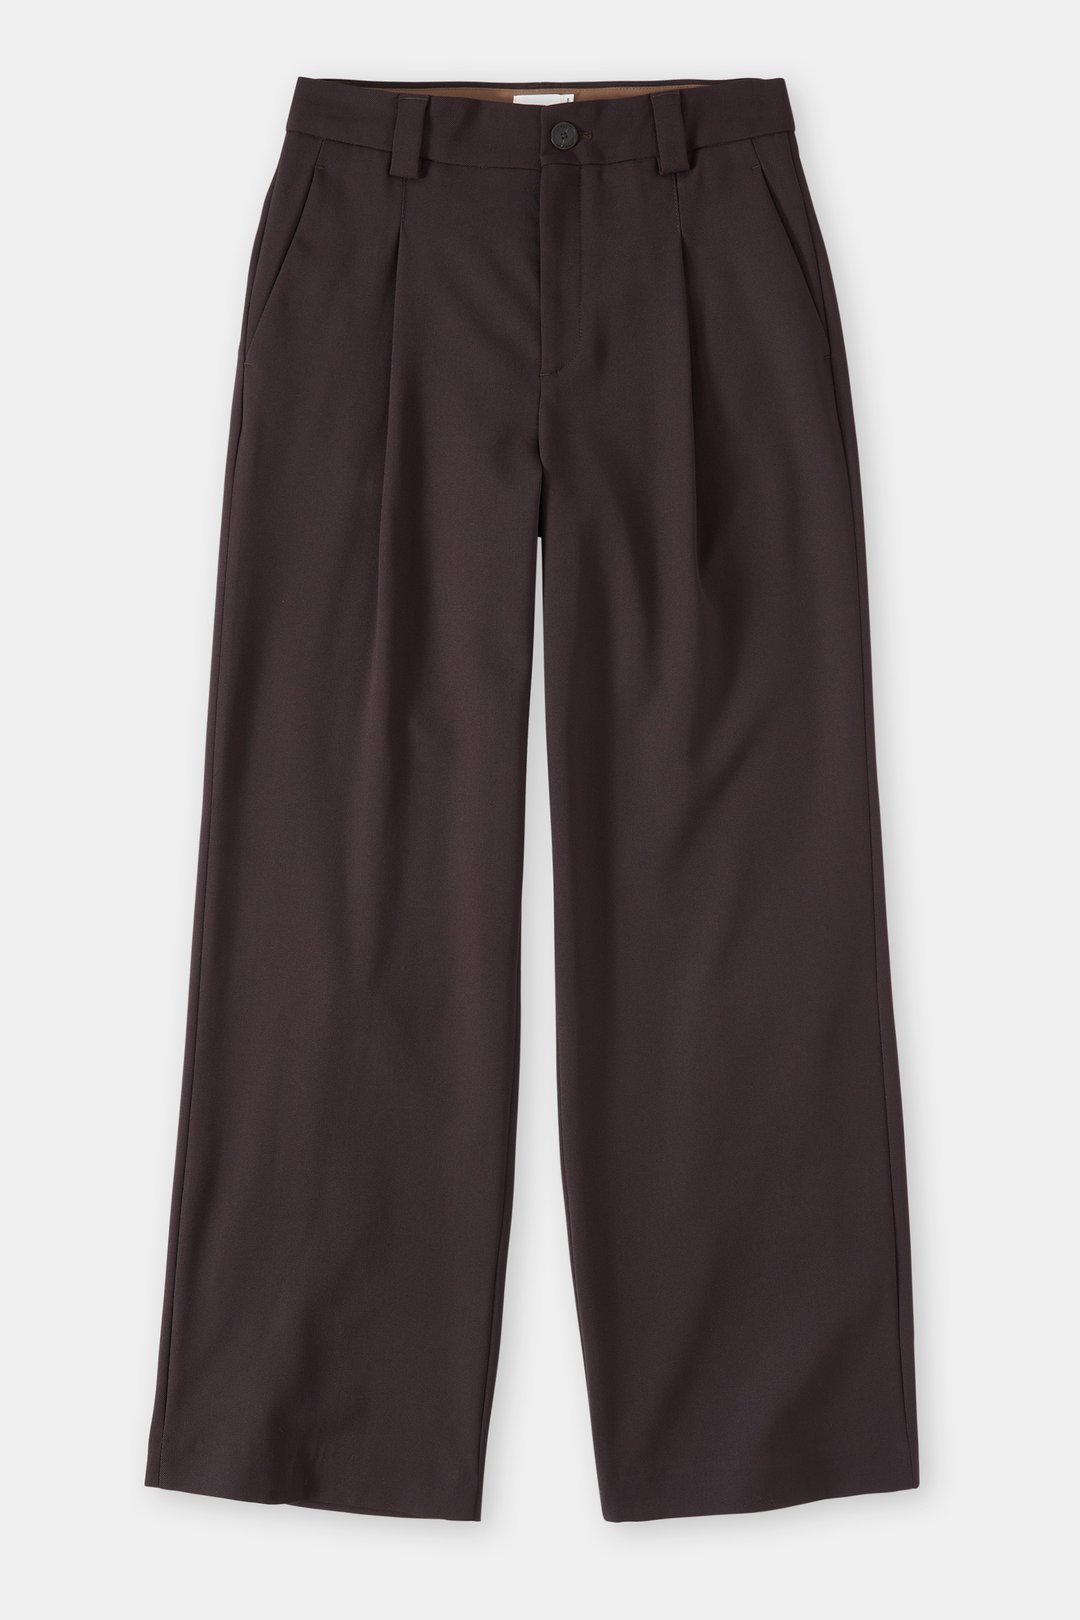 Buy Lastinch Women's Plus Size Olive Green Wrap Trouser (XXXX